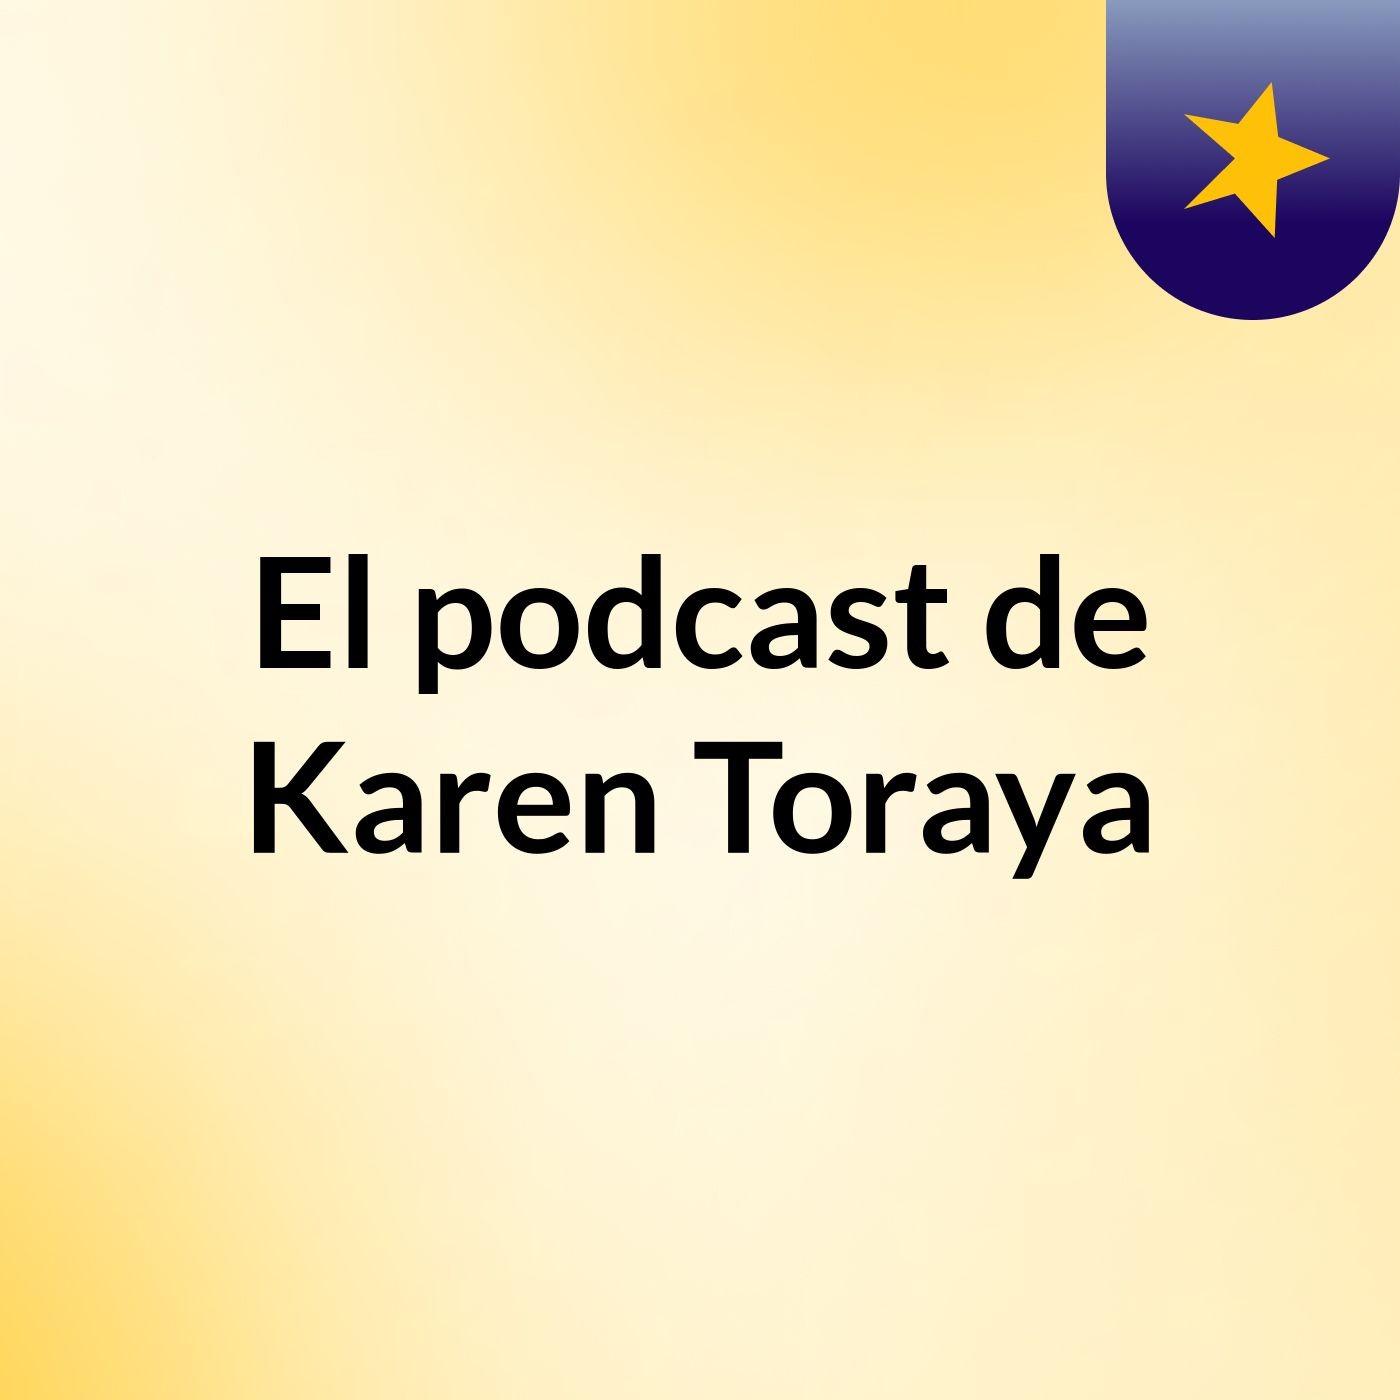 El podcast de Karen Toraya